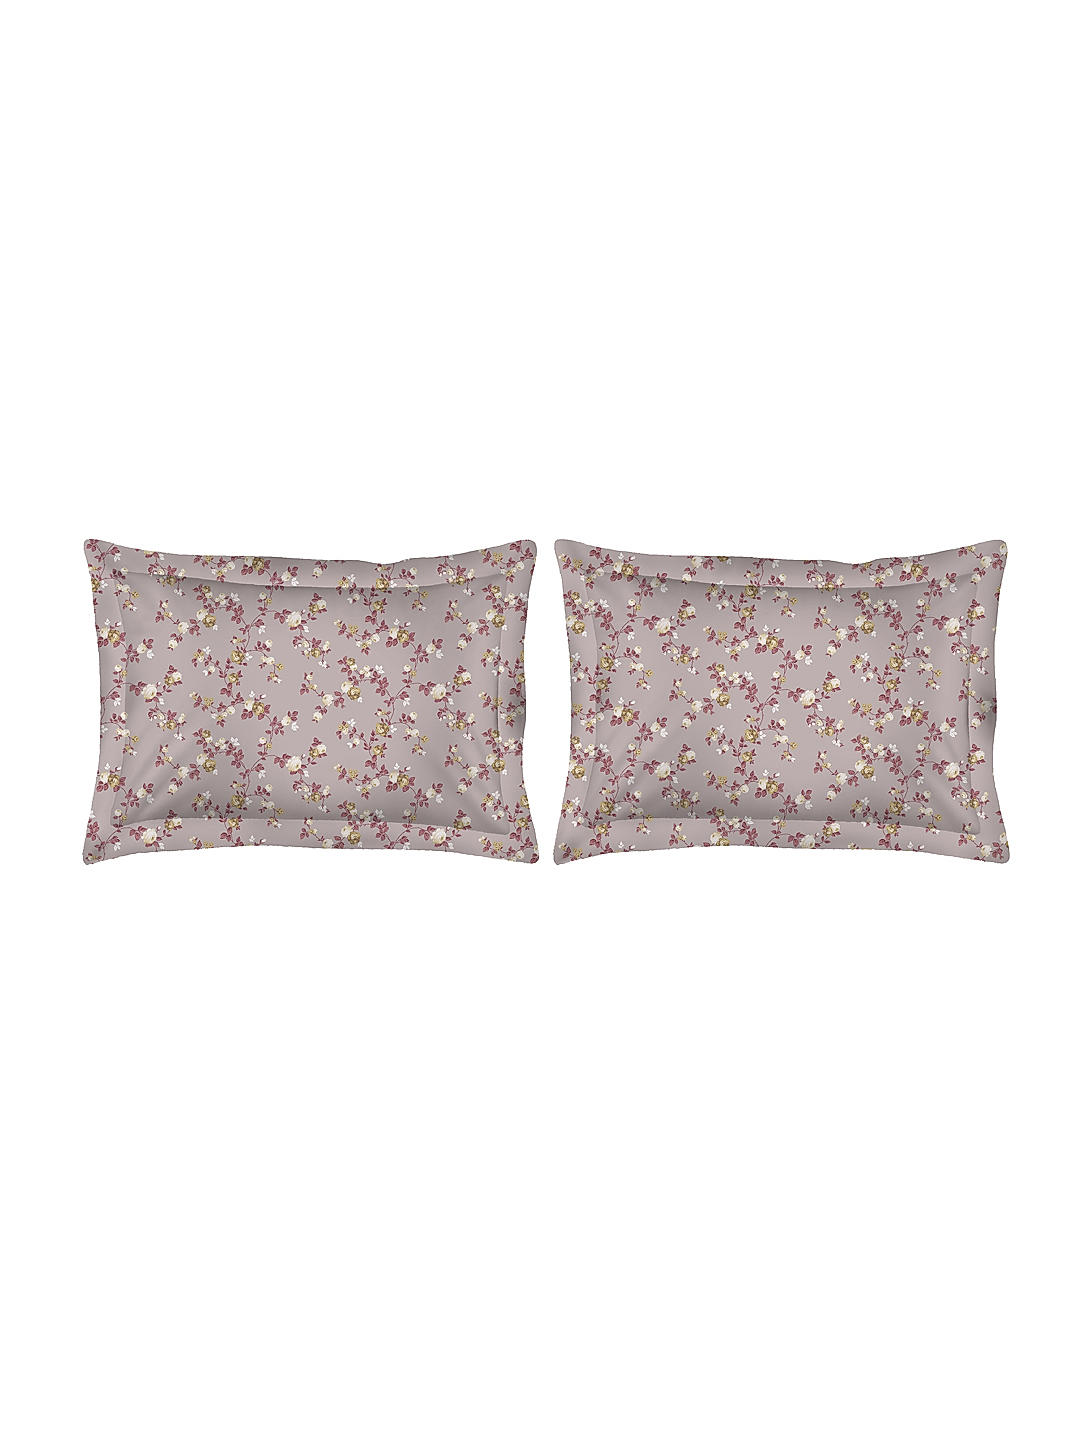 Iris Gaze Cotton Fine Grey  Colored Floral Print King Bed Sheet Set